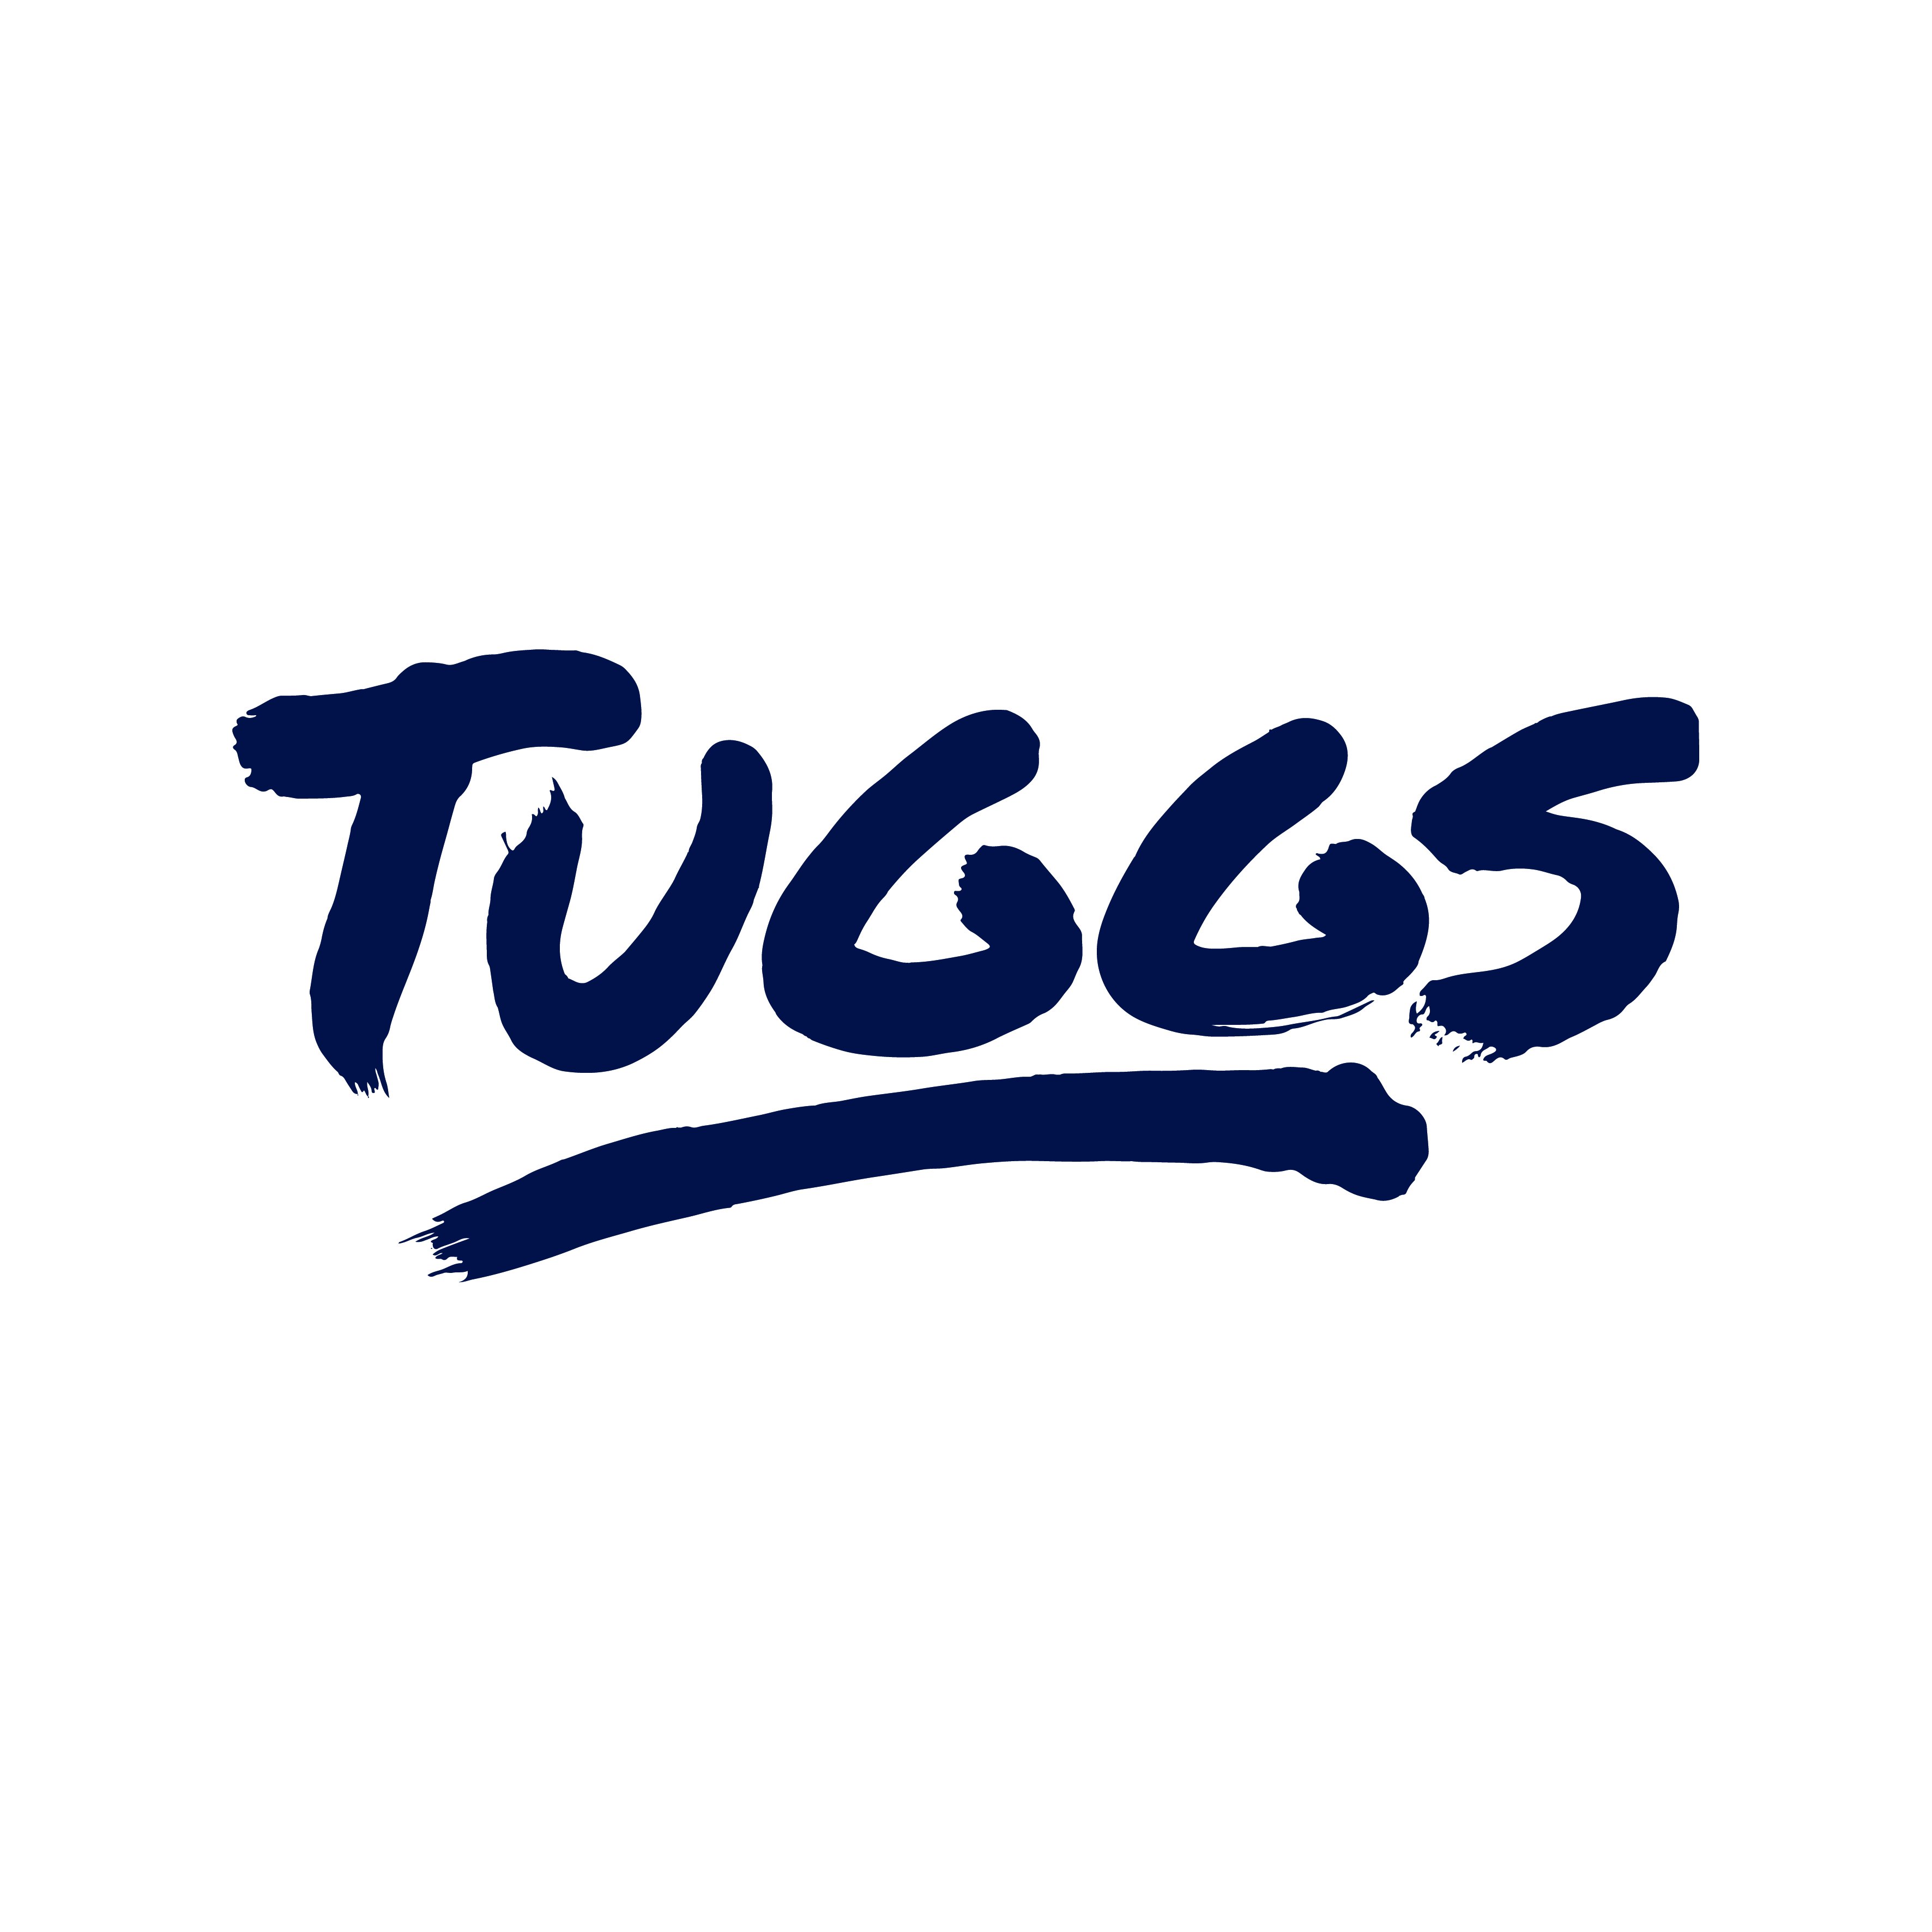 Tuggs